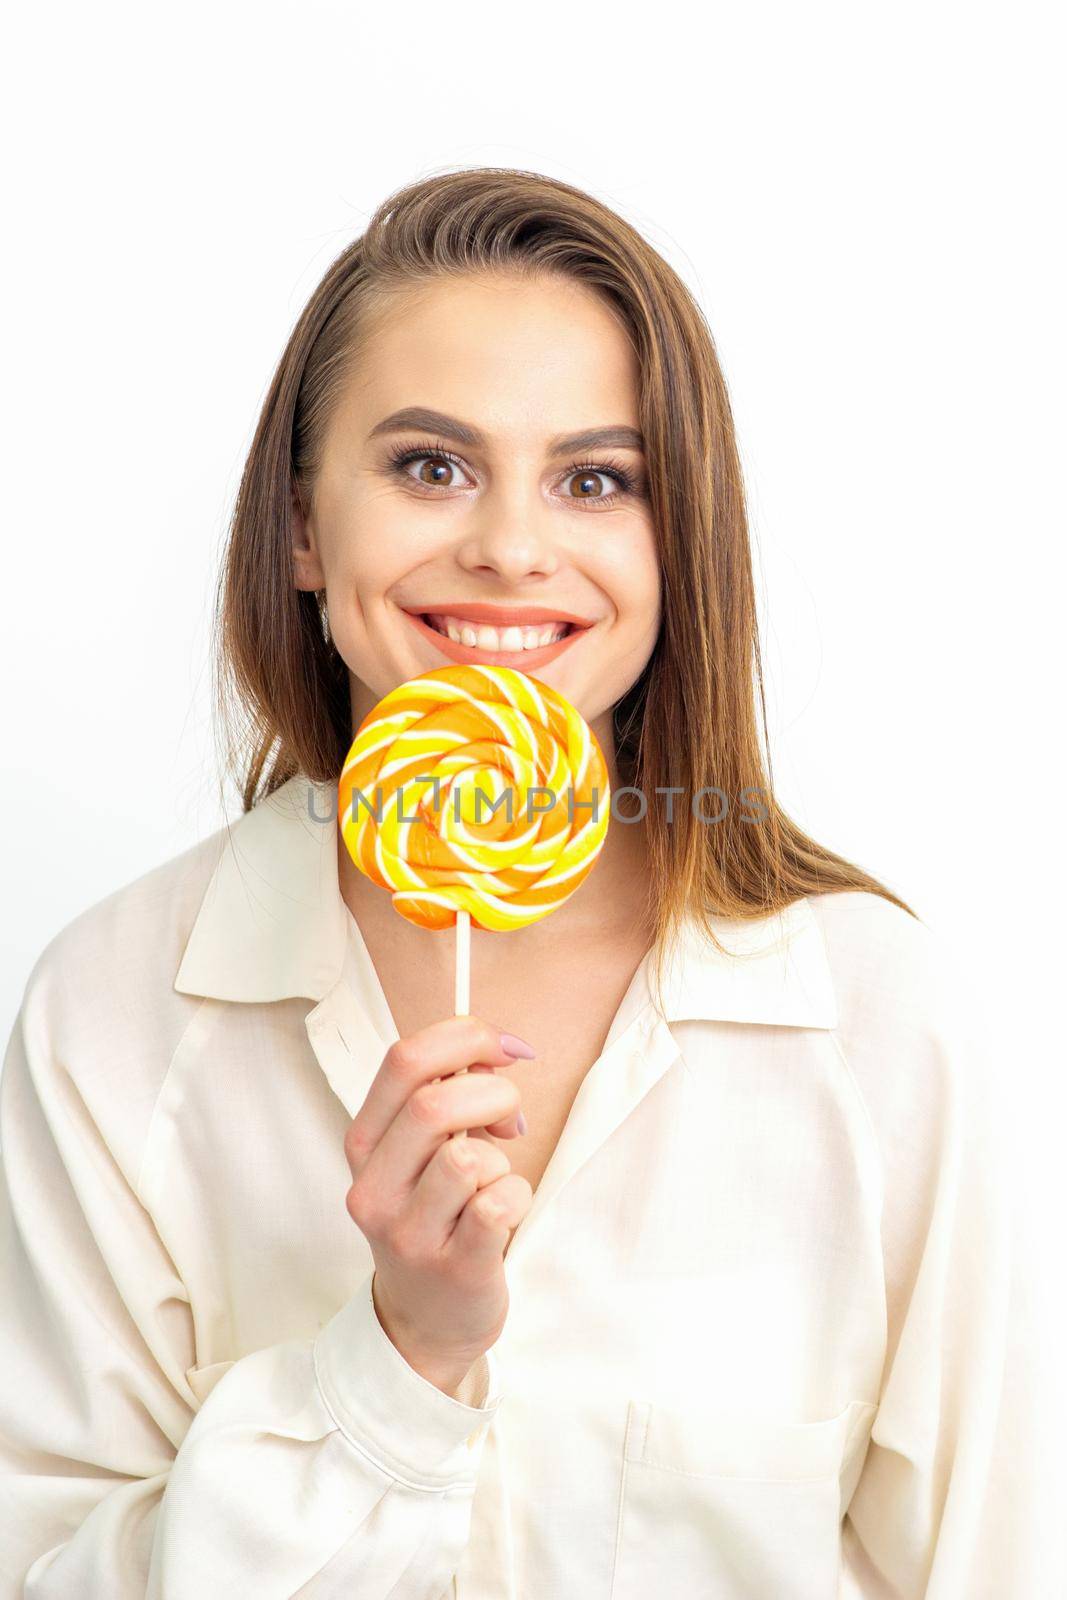 Beautiful young caucasian woman wearing a white shirt licking a lollipop on a white background. by okskukuruza